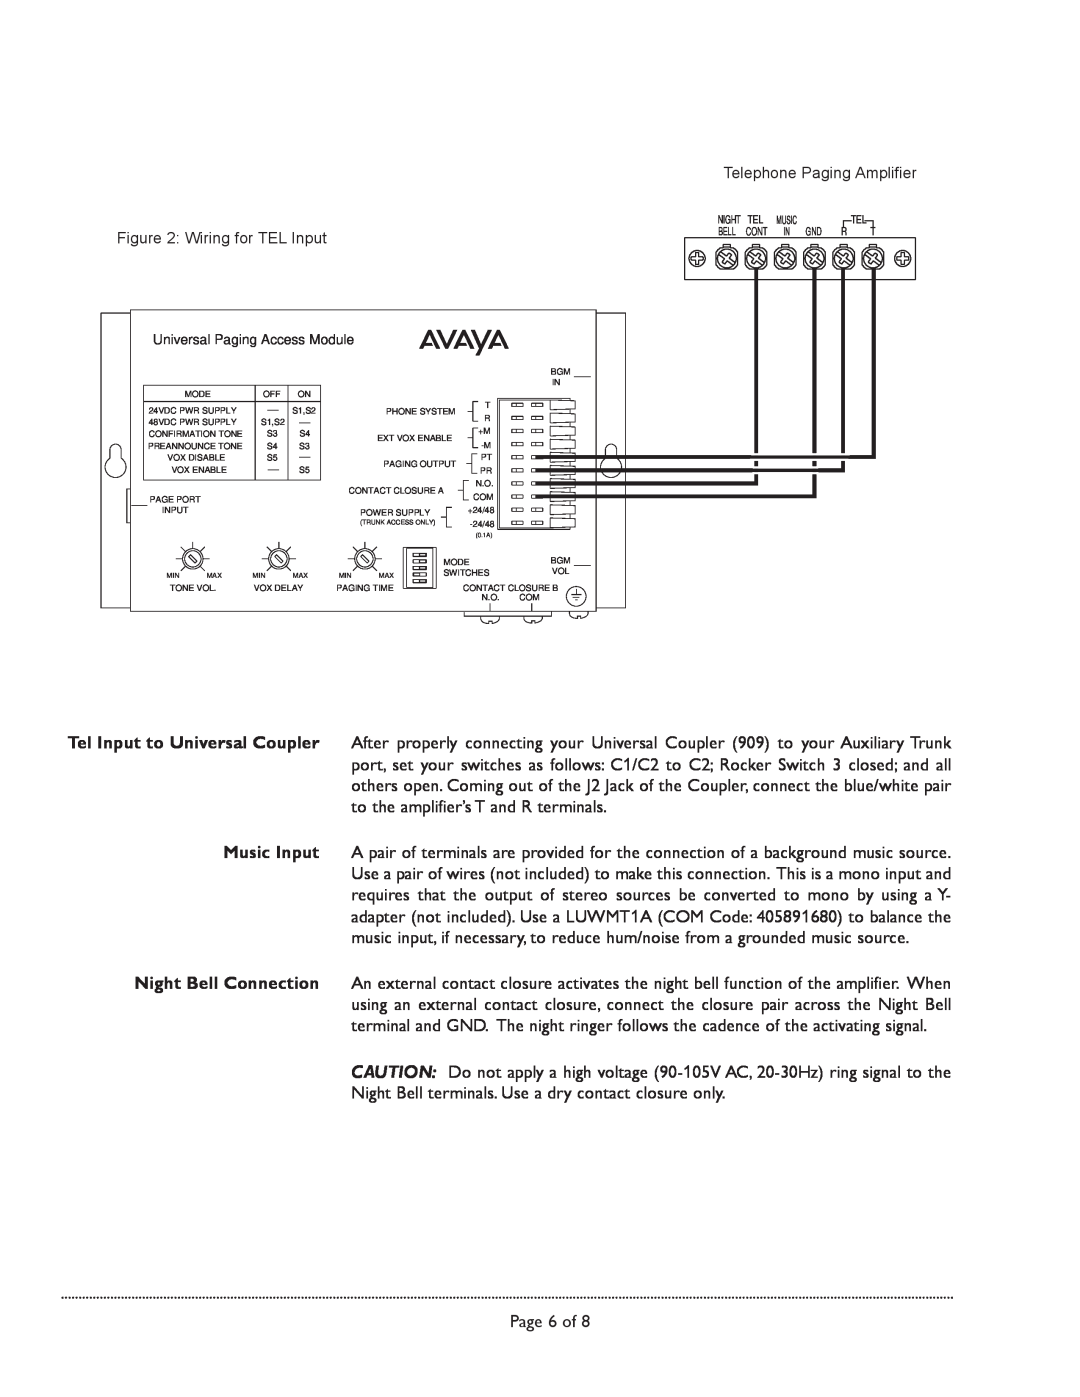 Avaya 10-Watt manual Page 6 of 